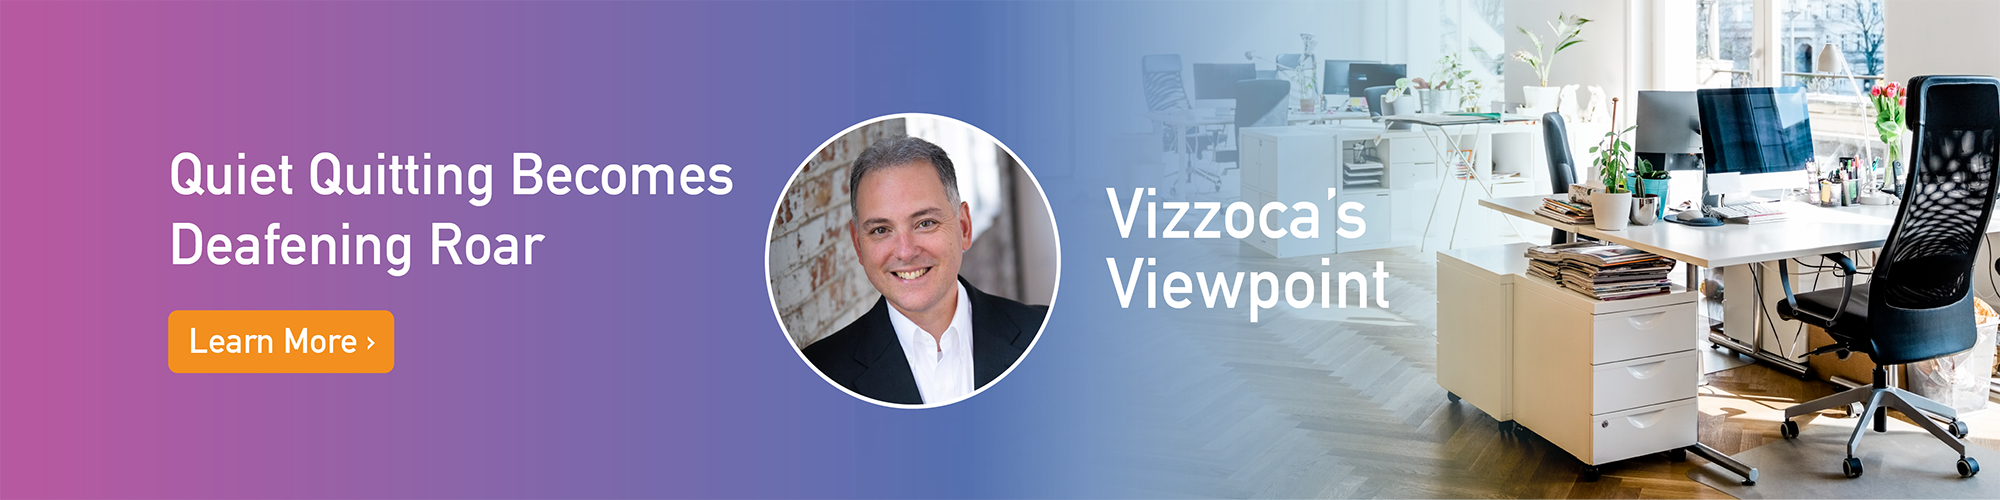 Vizzoca's Viewpoint